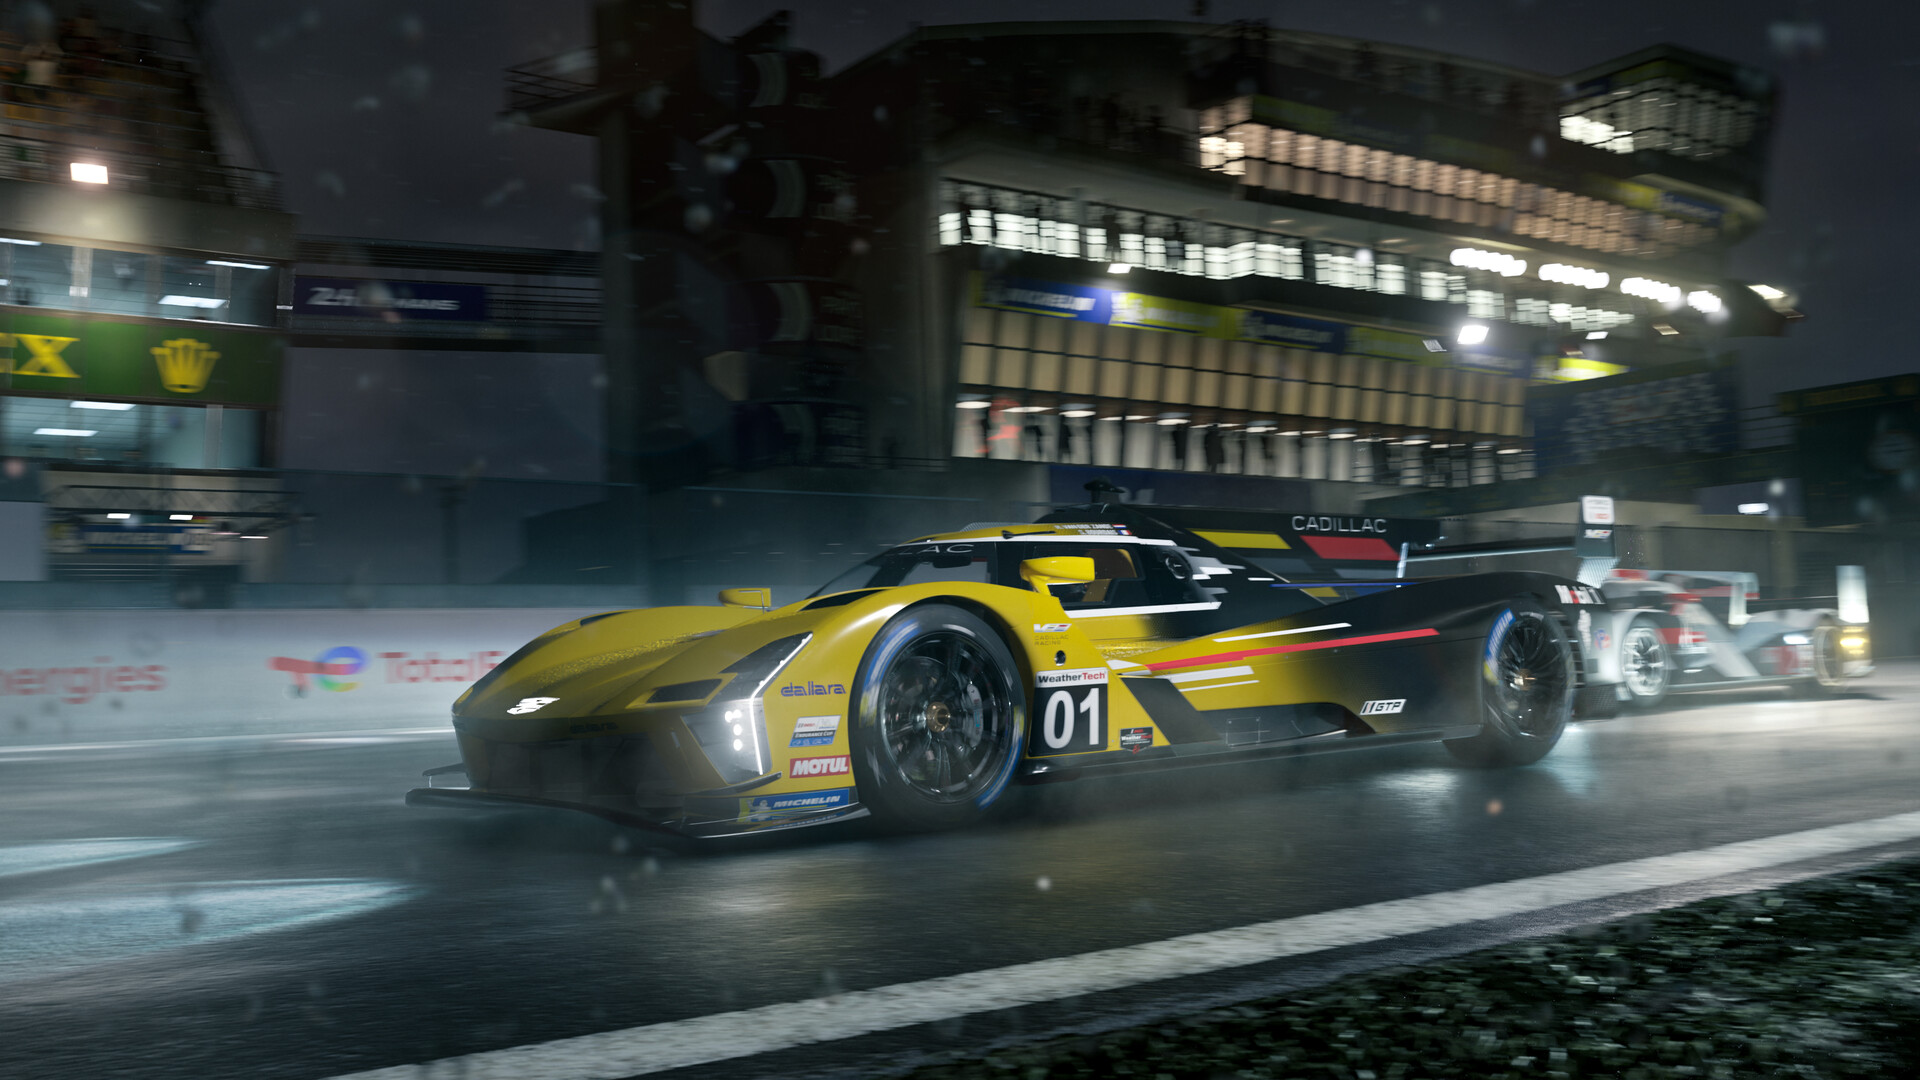 Forza Motorsport on Steam